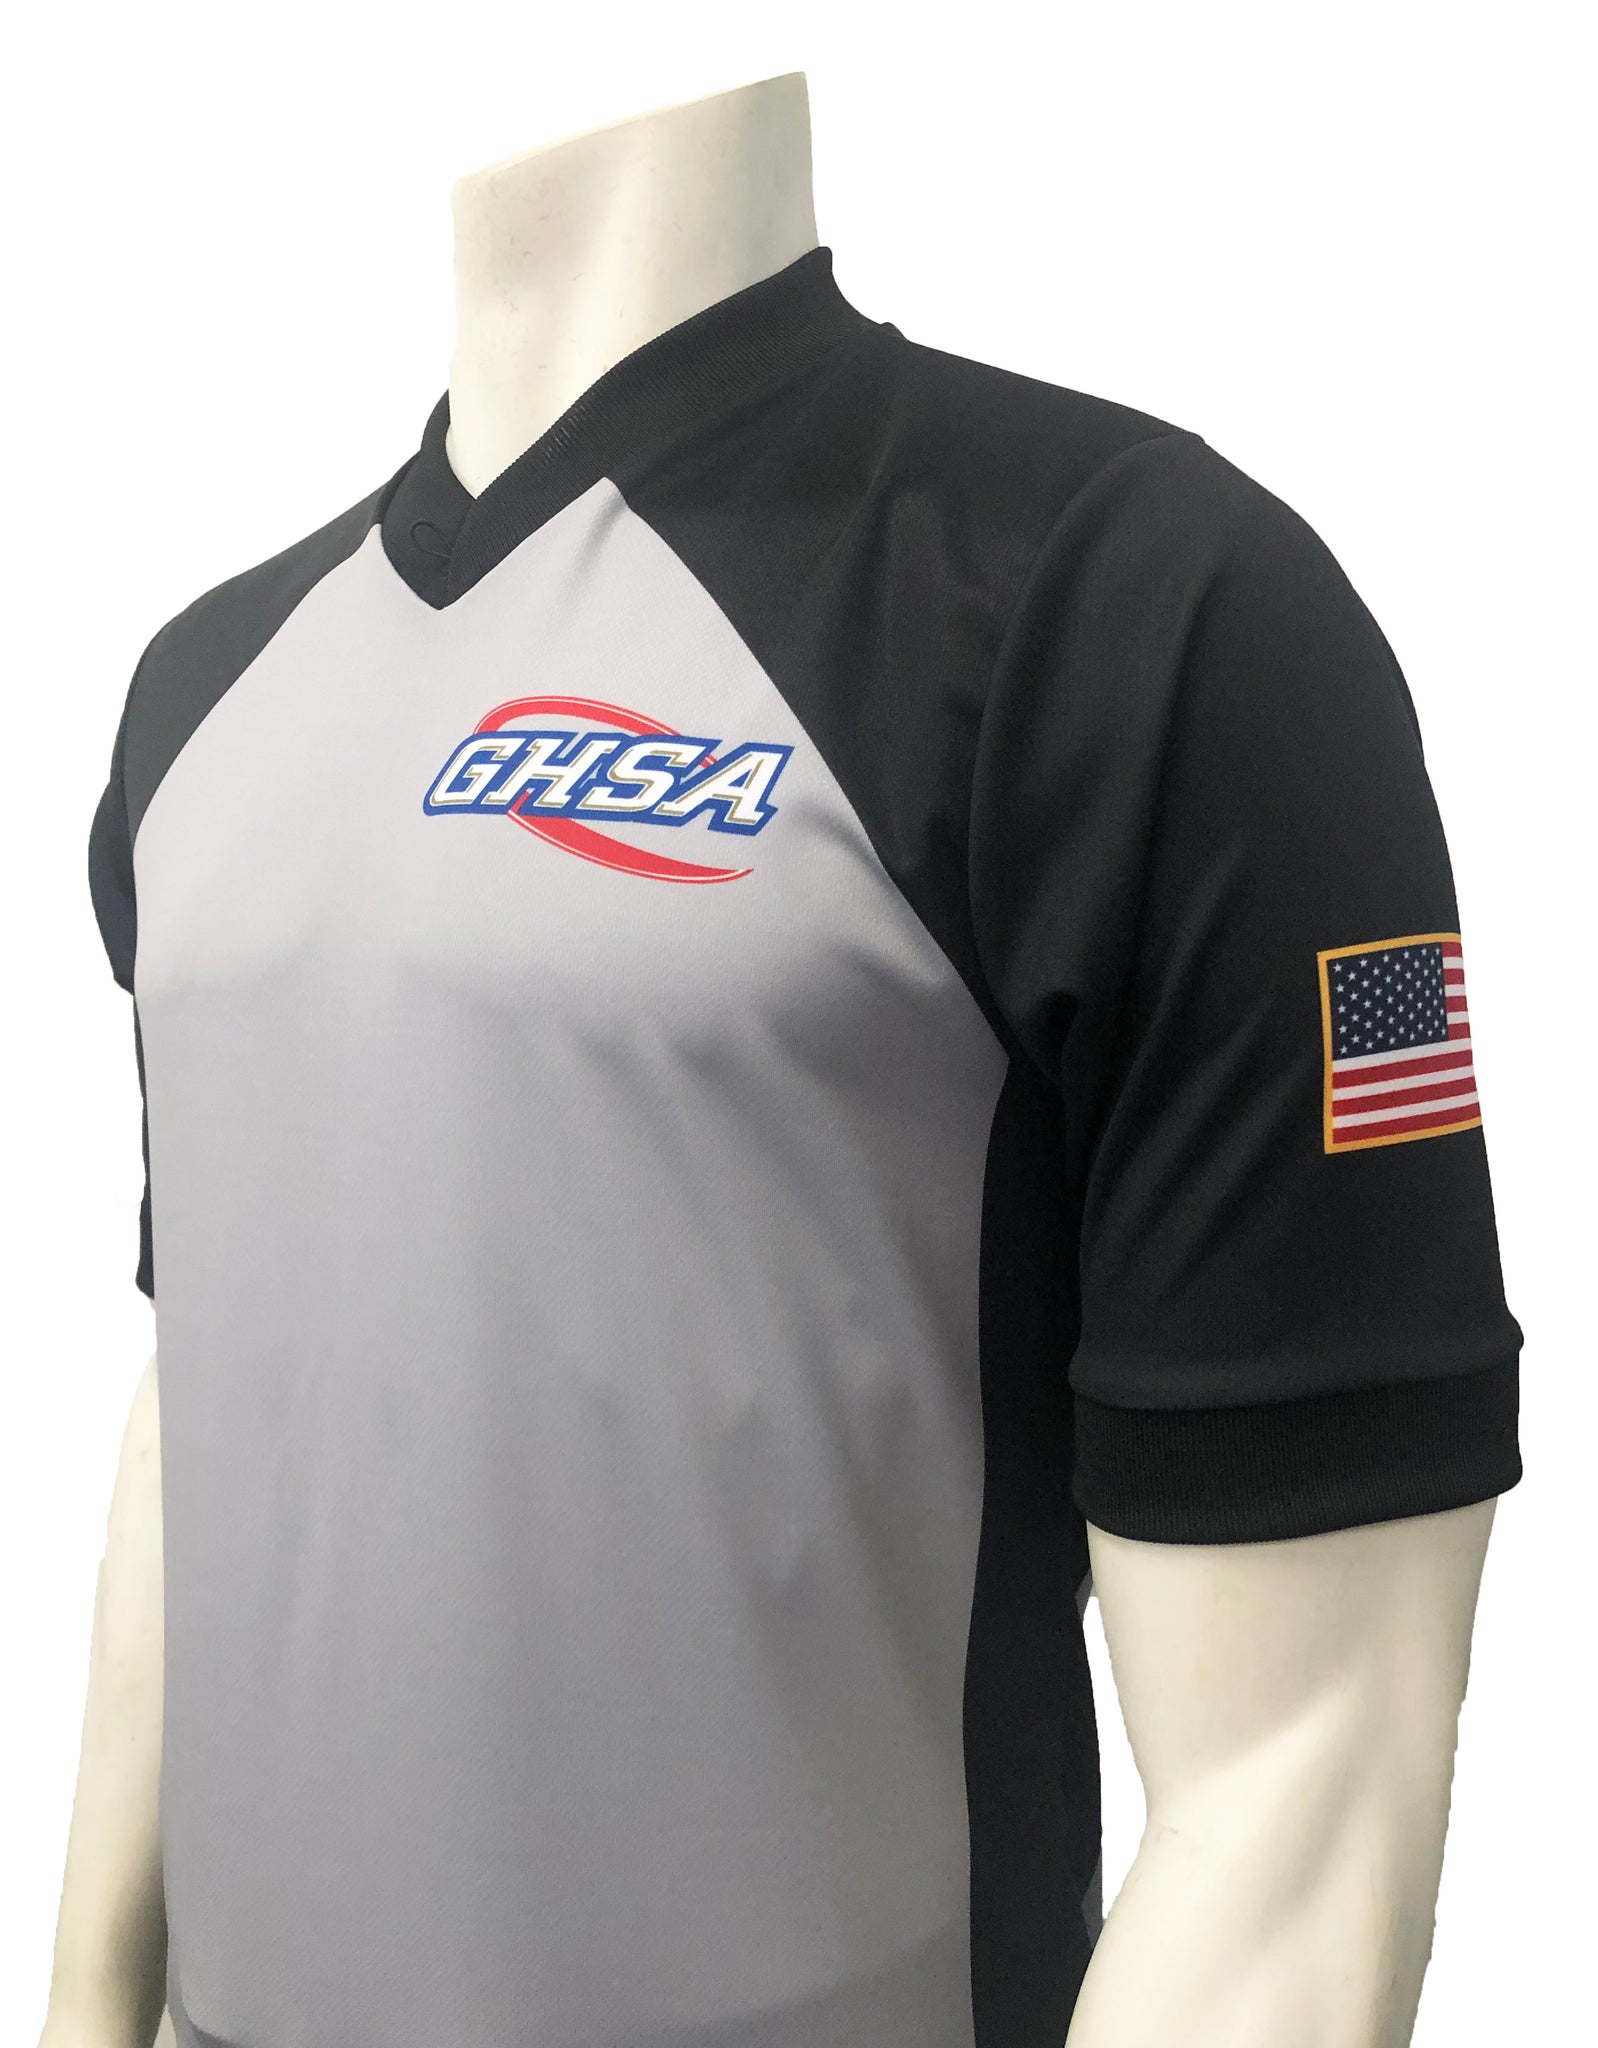 NEW Grey GHSA Basketball Men's Referee Shirt – Precision Officials